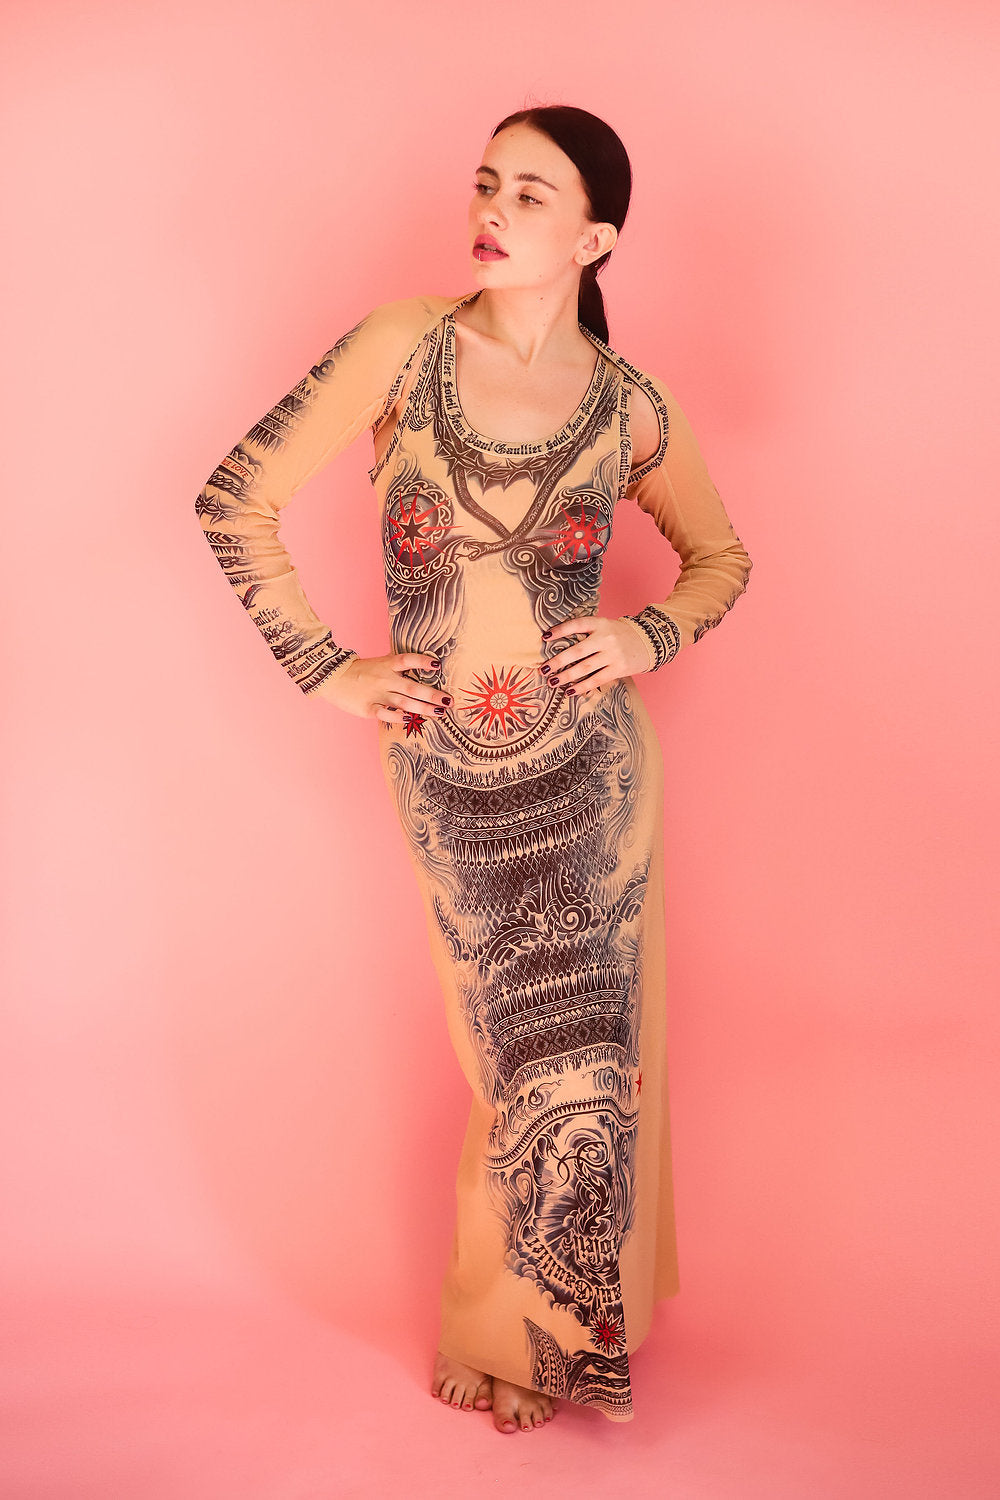 Jean Paul Gaultier Soleil Tattoo Print Mesh Dress Set